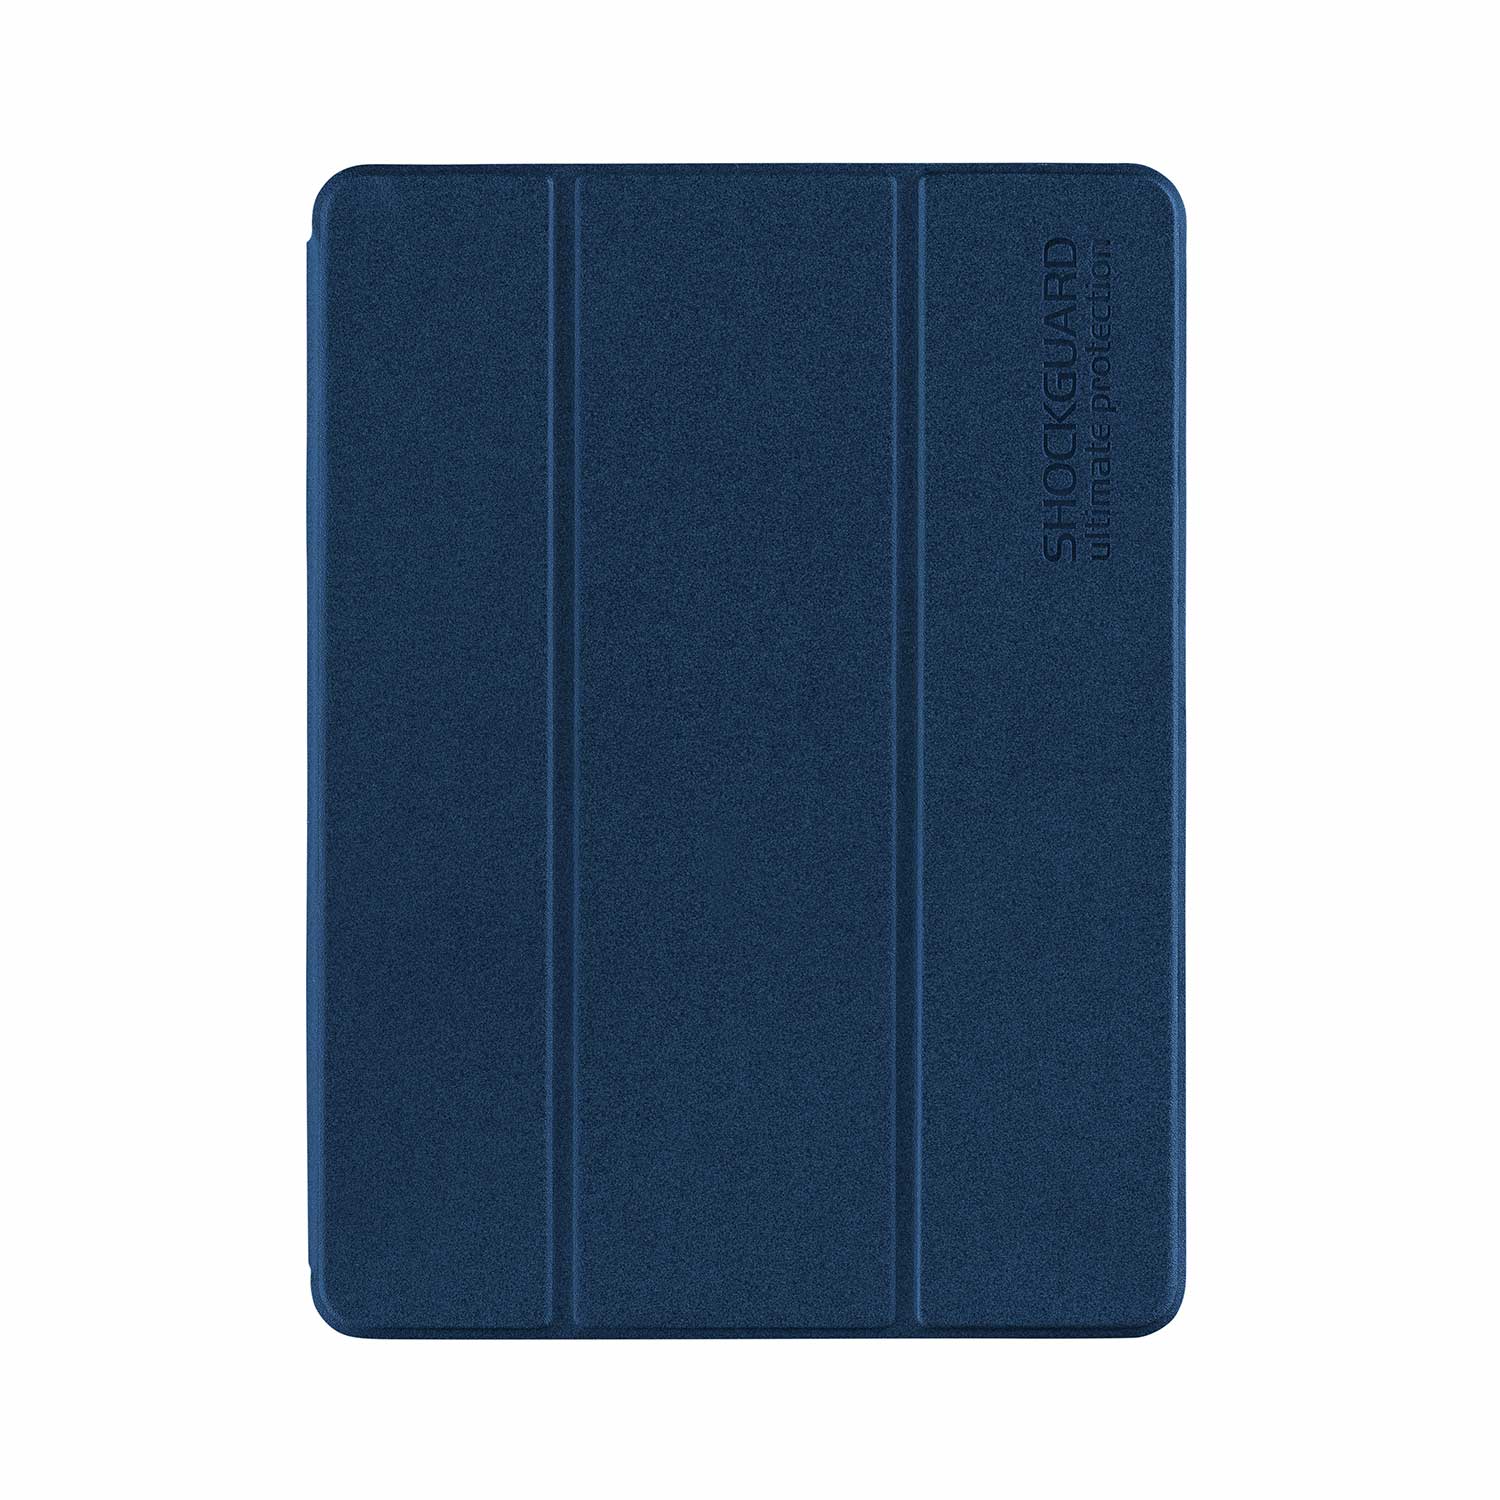 SHOCKGUARD SLIM / PEN iPad 10.2 Folio Case blau EDU 